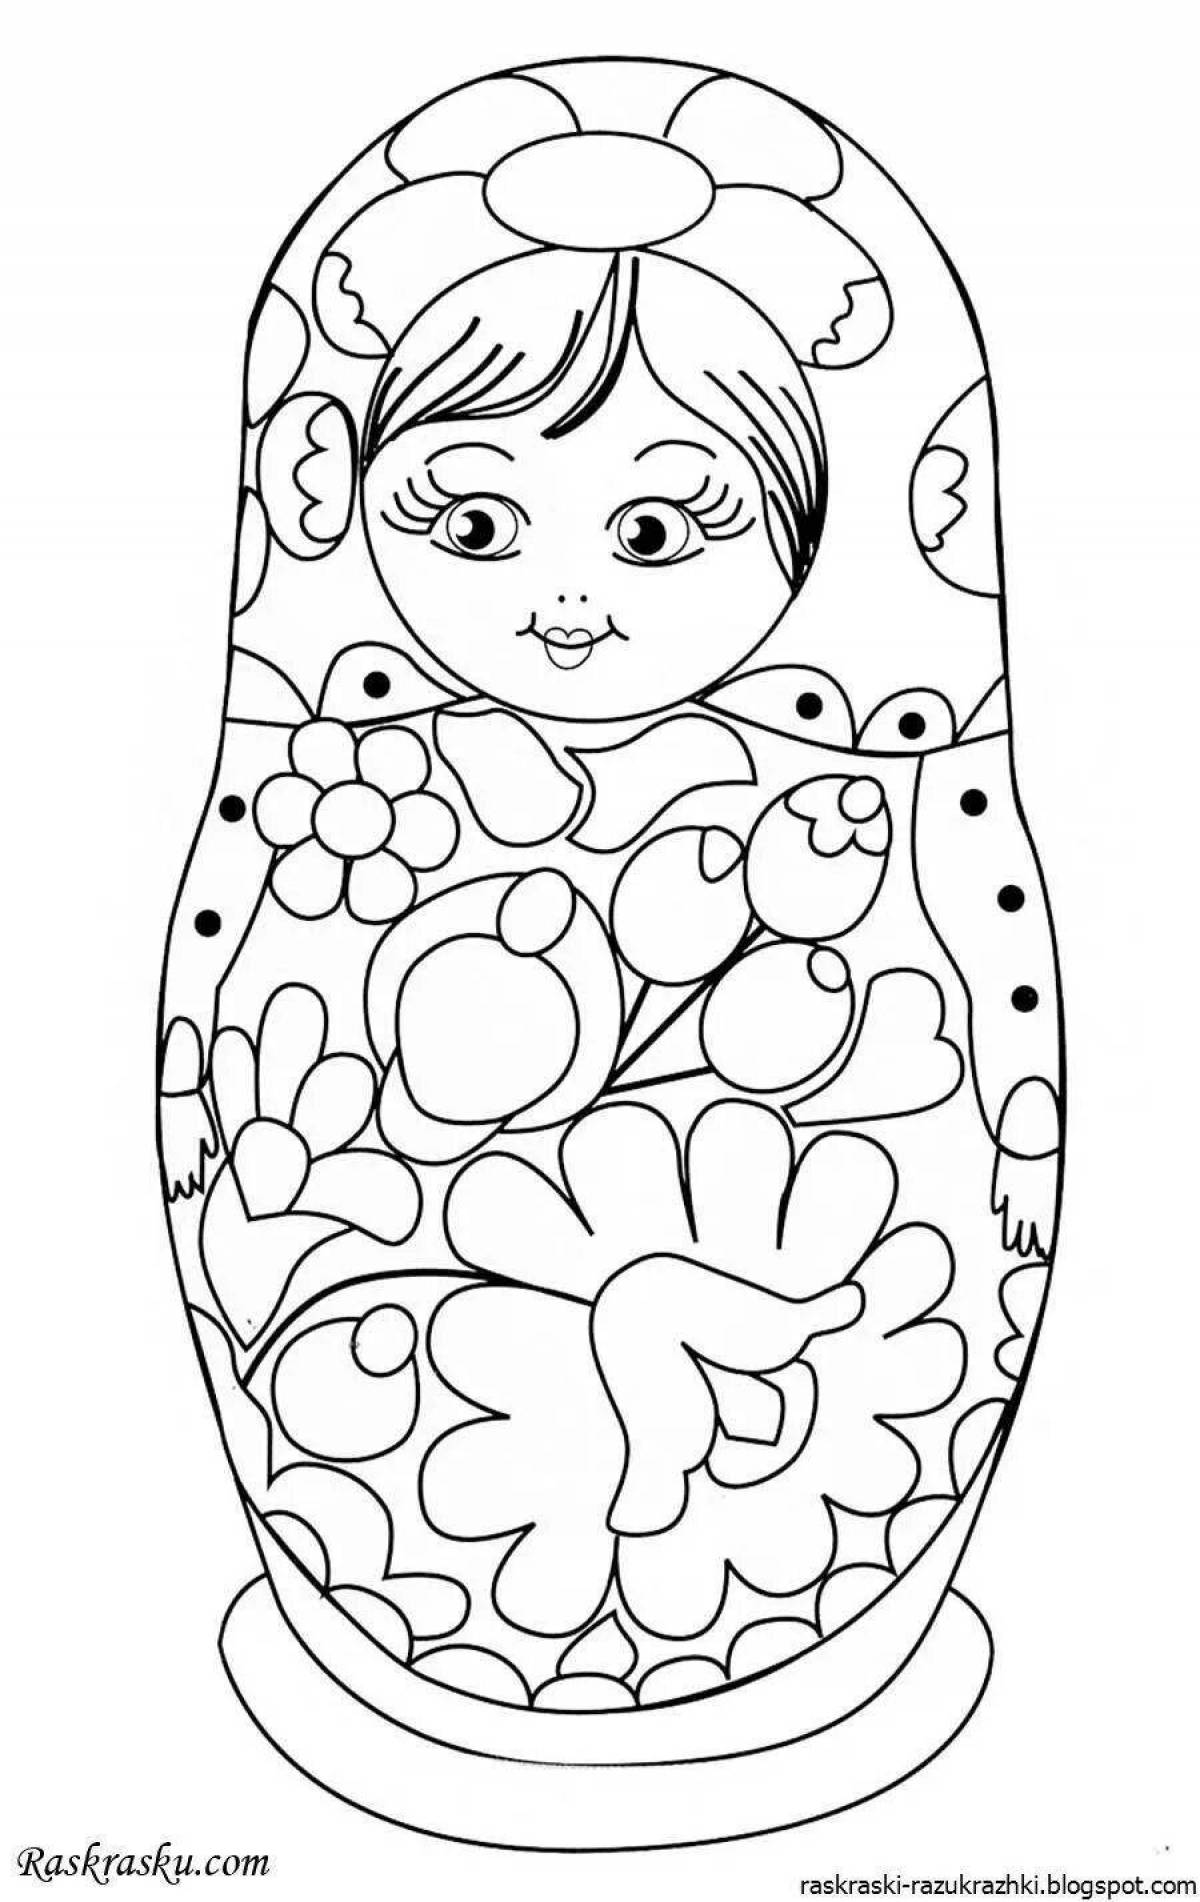 Joyful Russian matryoshka coloring book for children 6-7 years old